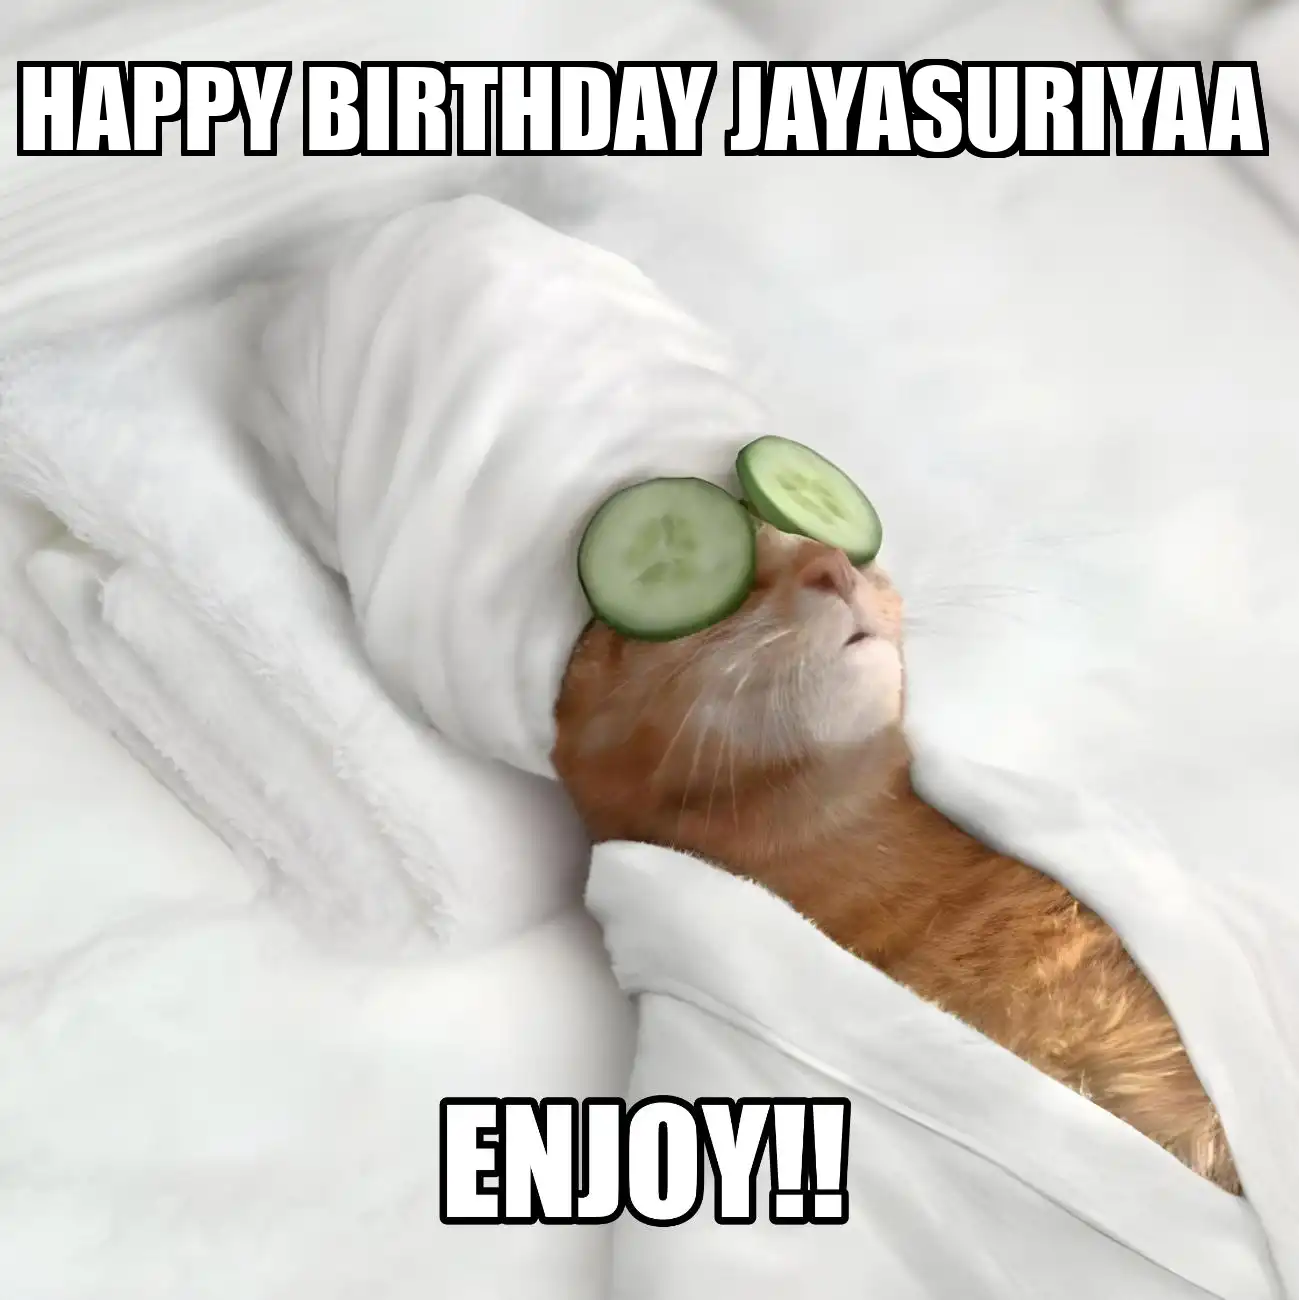 Happy Birthday Jayasuriyaa Enjoy Cat Meme